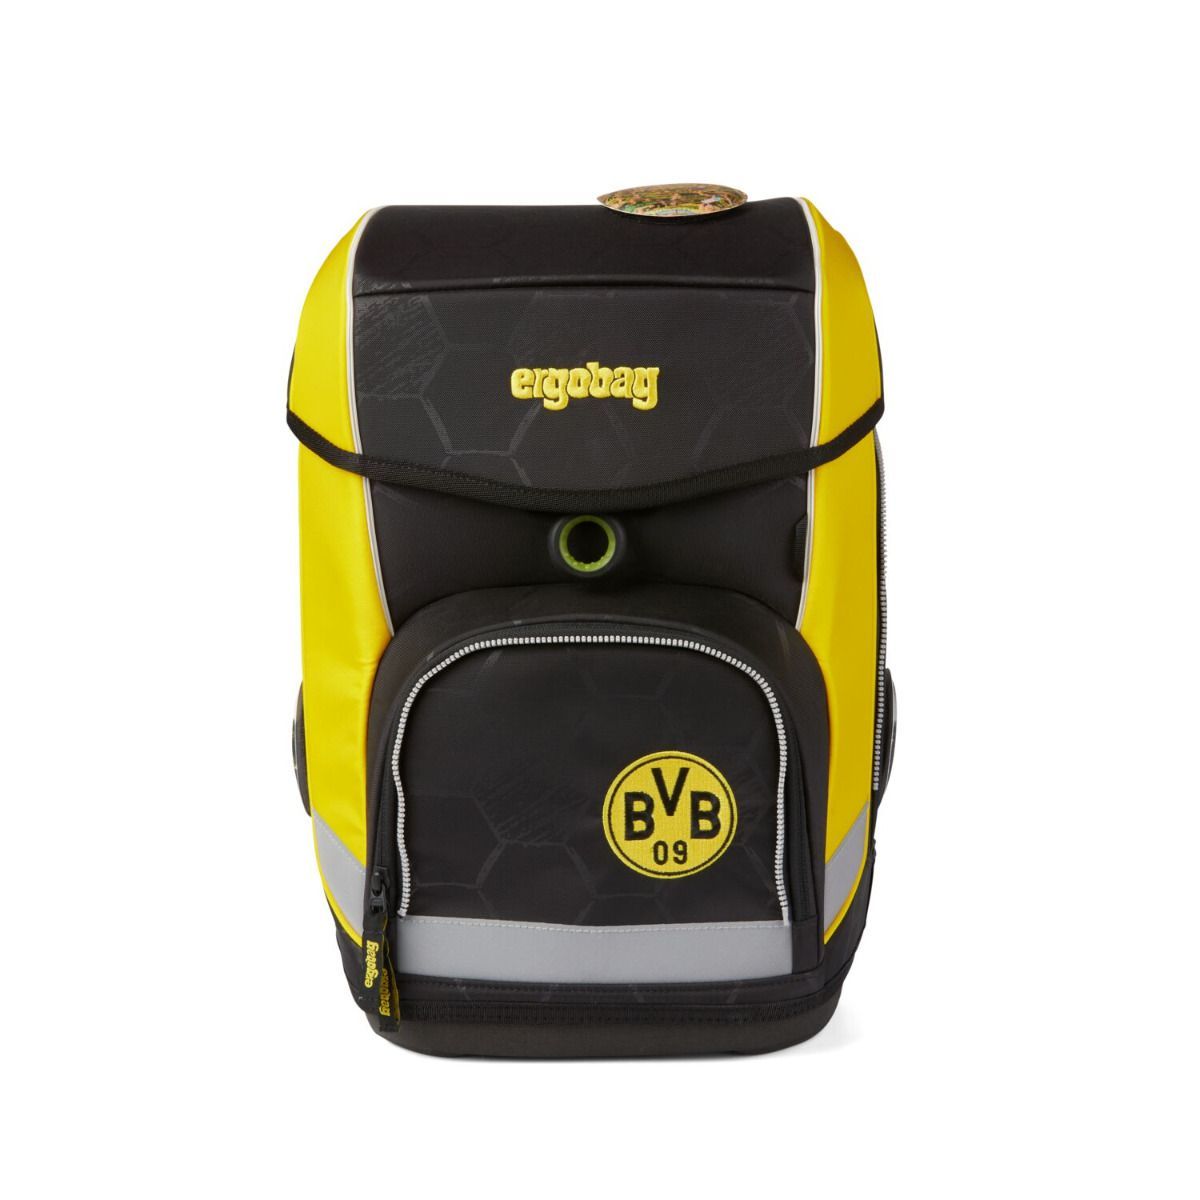 Ergobag Cubo Borussia Dortmund Limited Edition Schulranzen Set 5tlg.